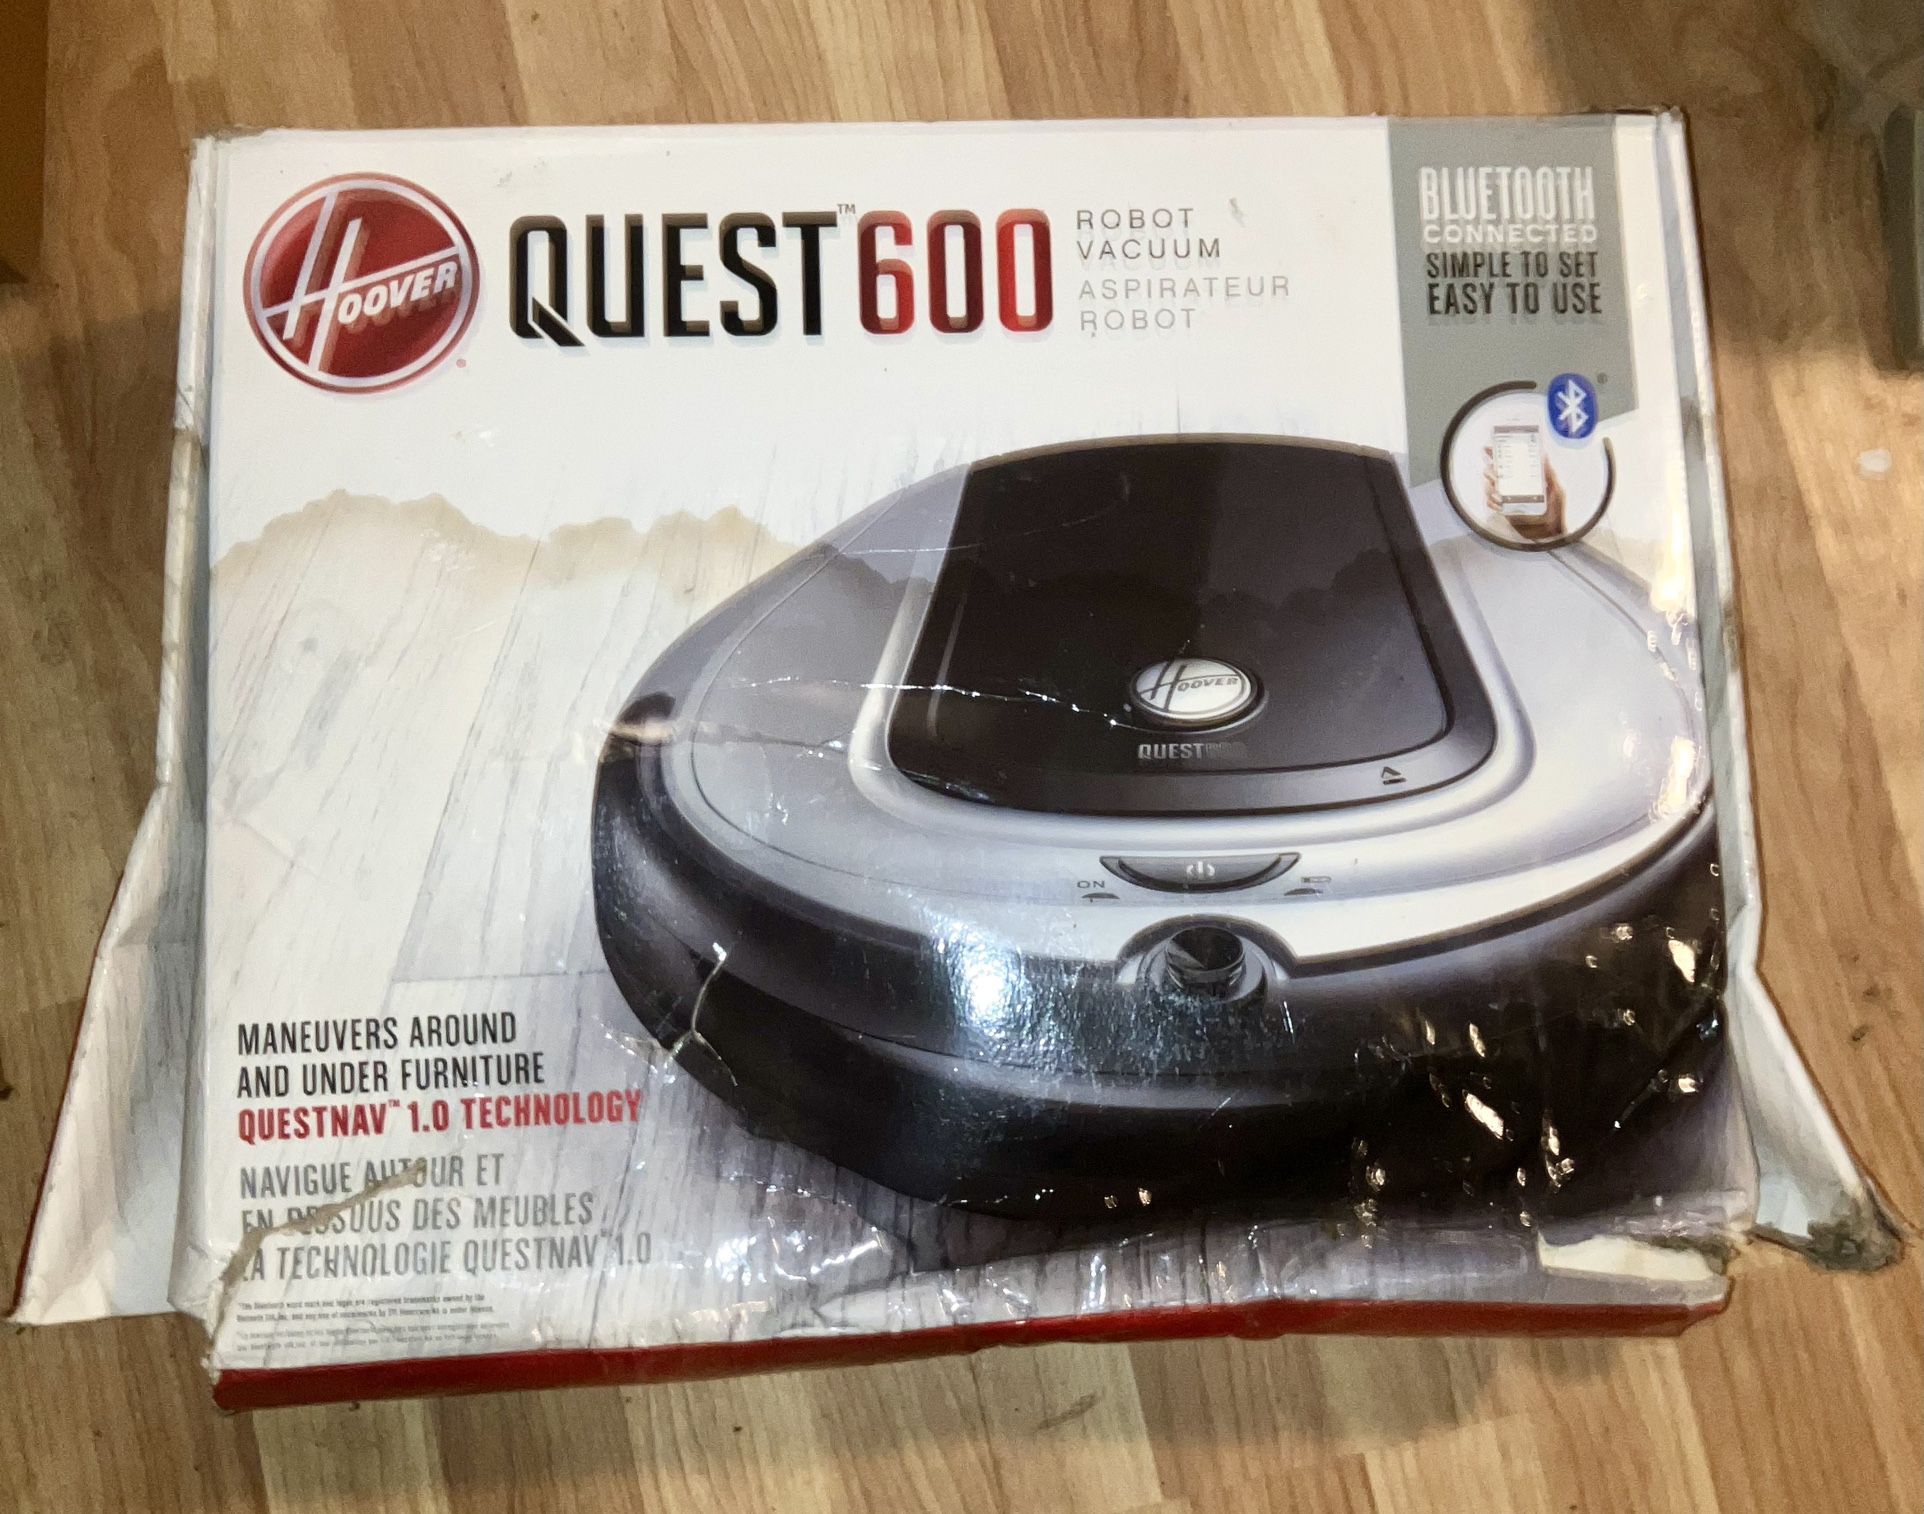 Hoover Quest 600 Robot Vacuum